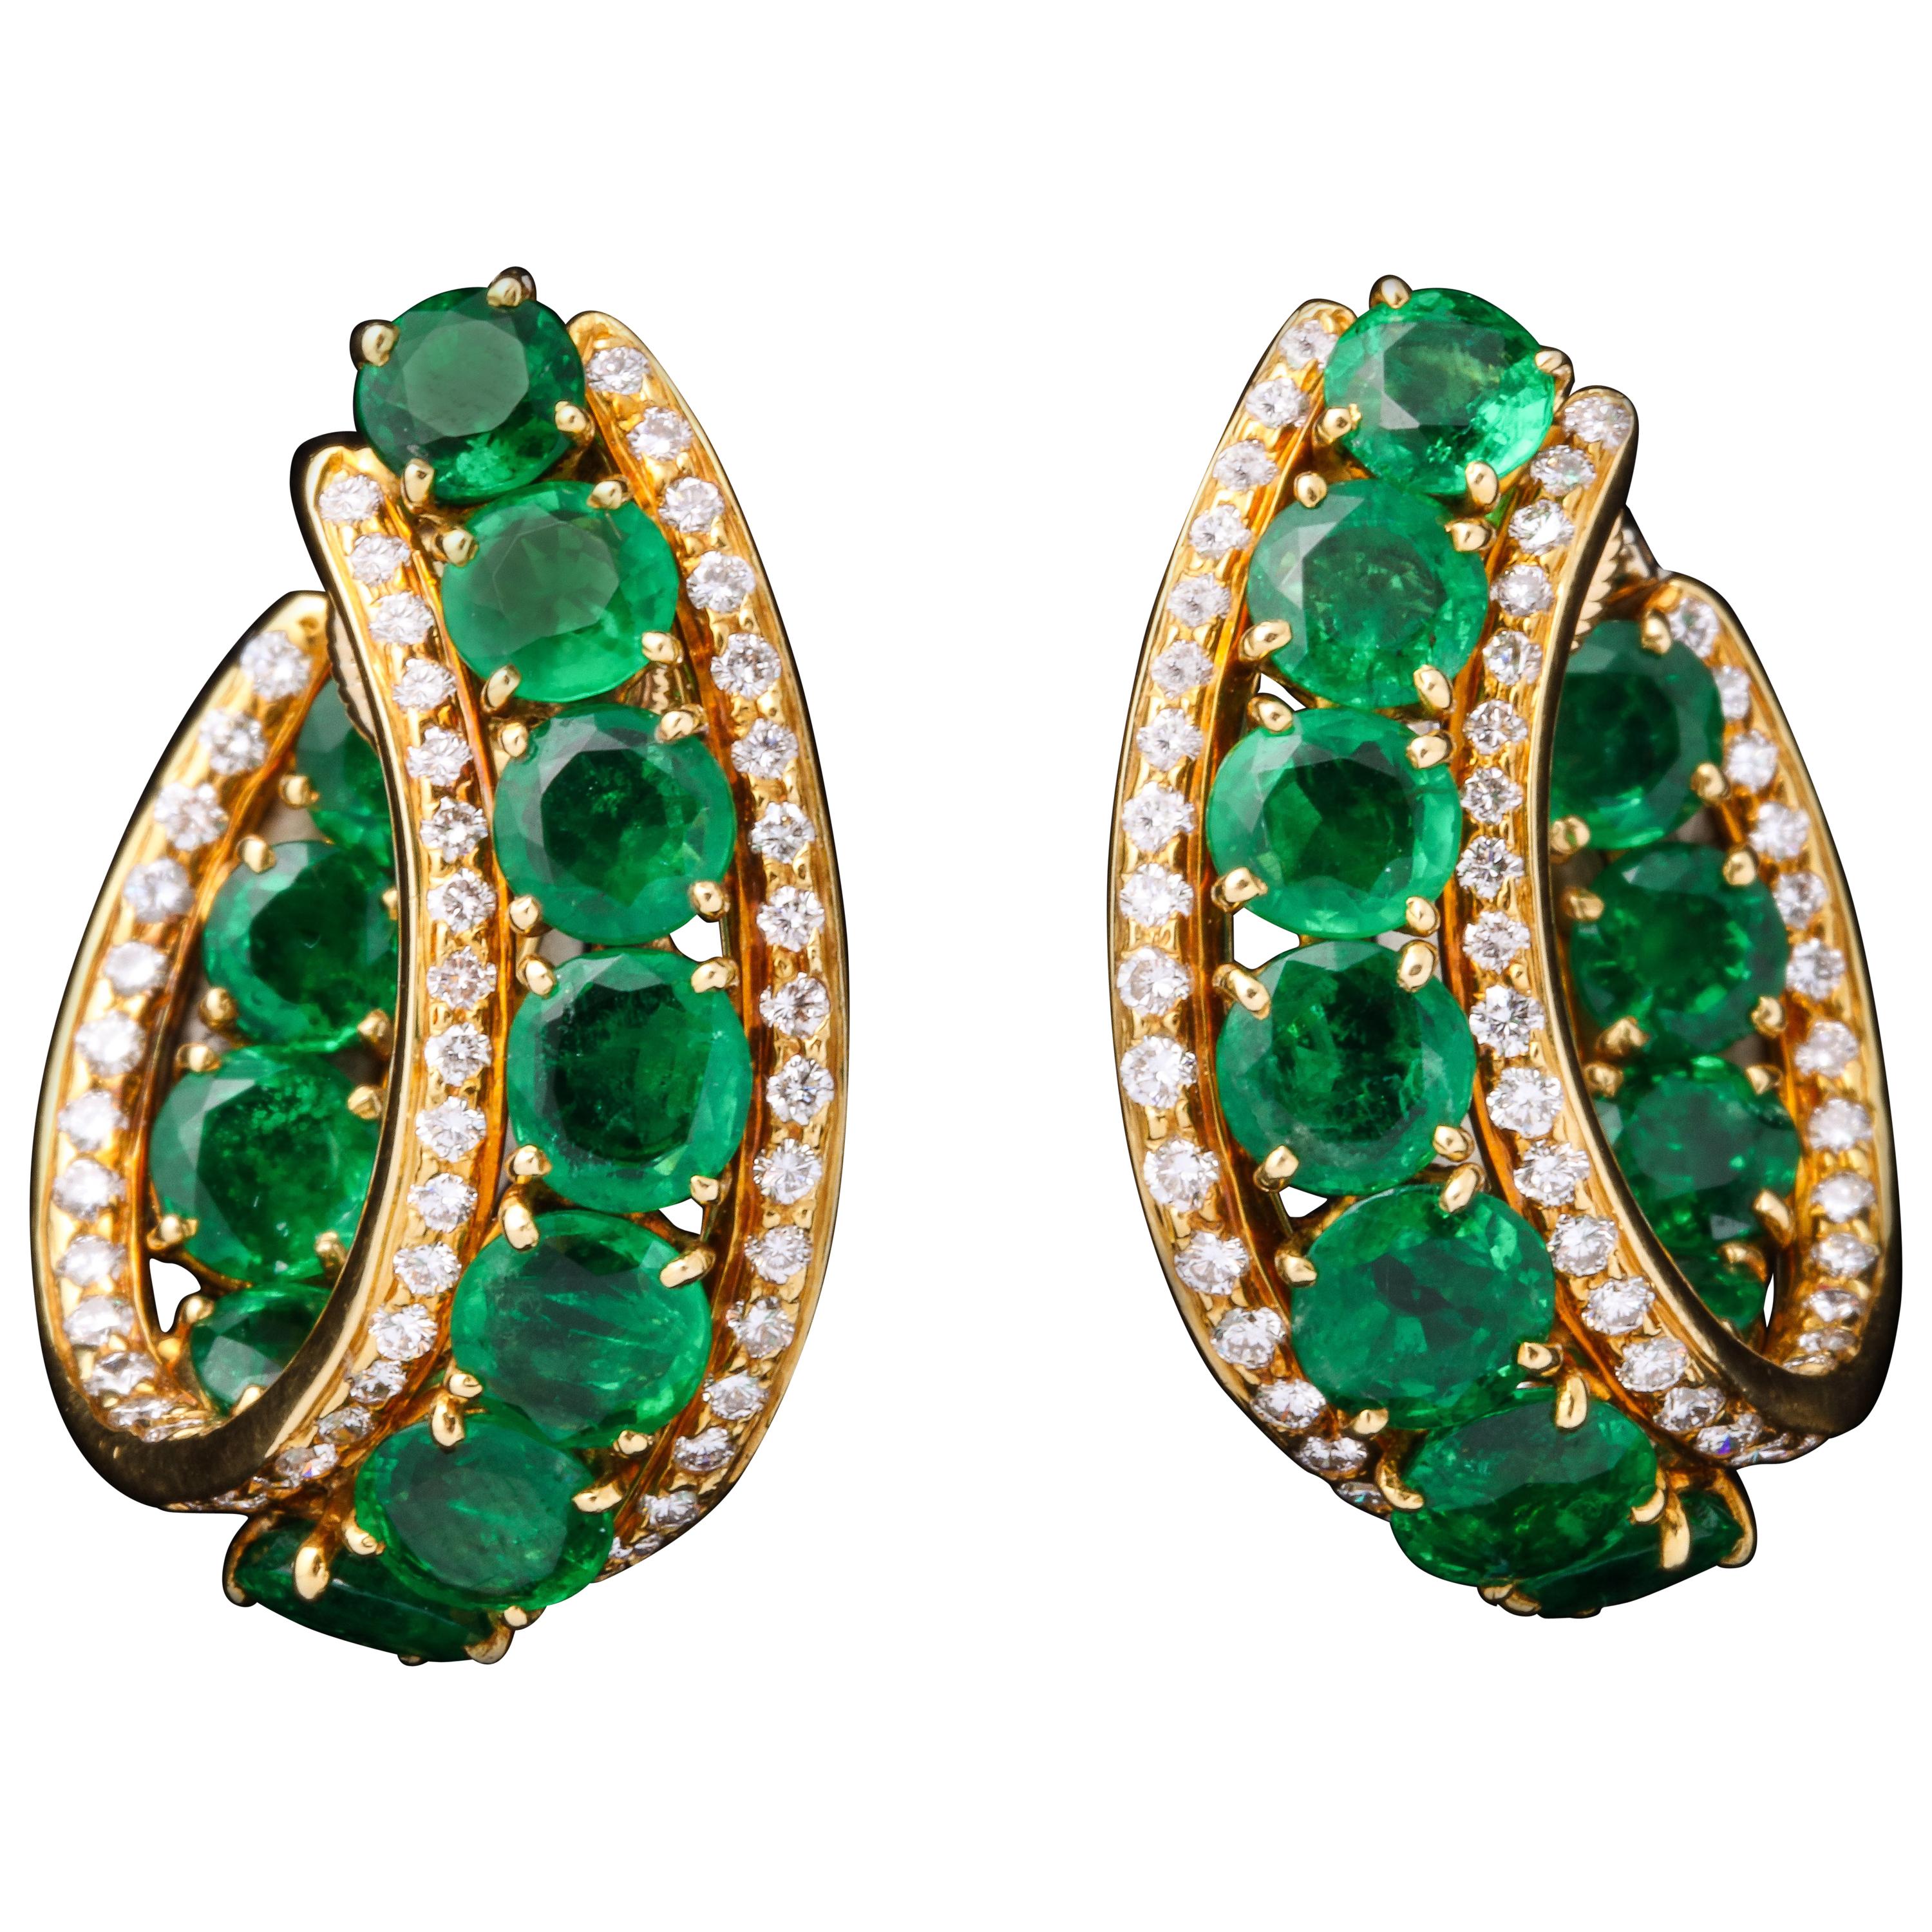 Harry Winston Emerald and Diamond Earrings